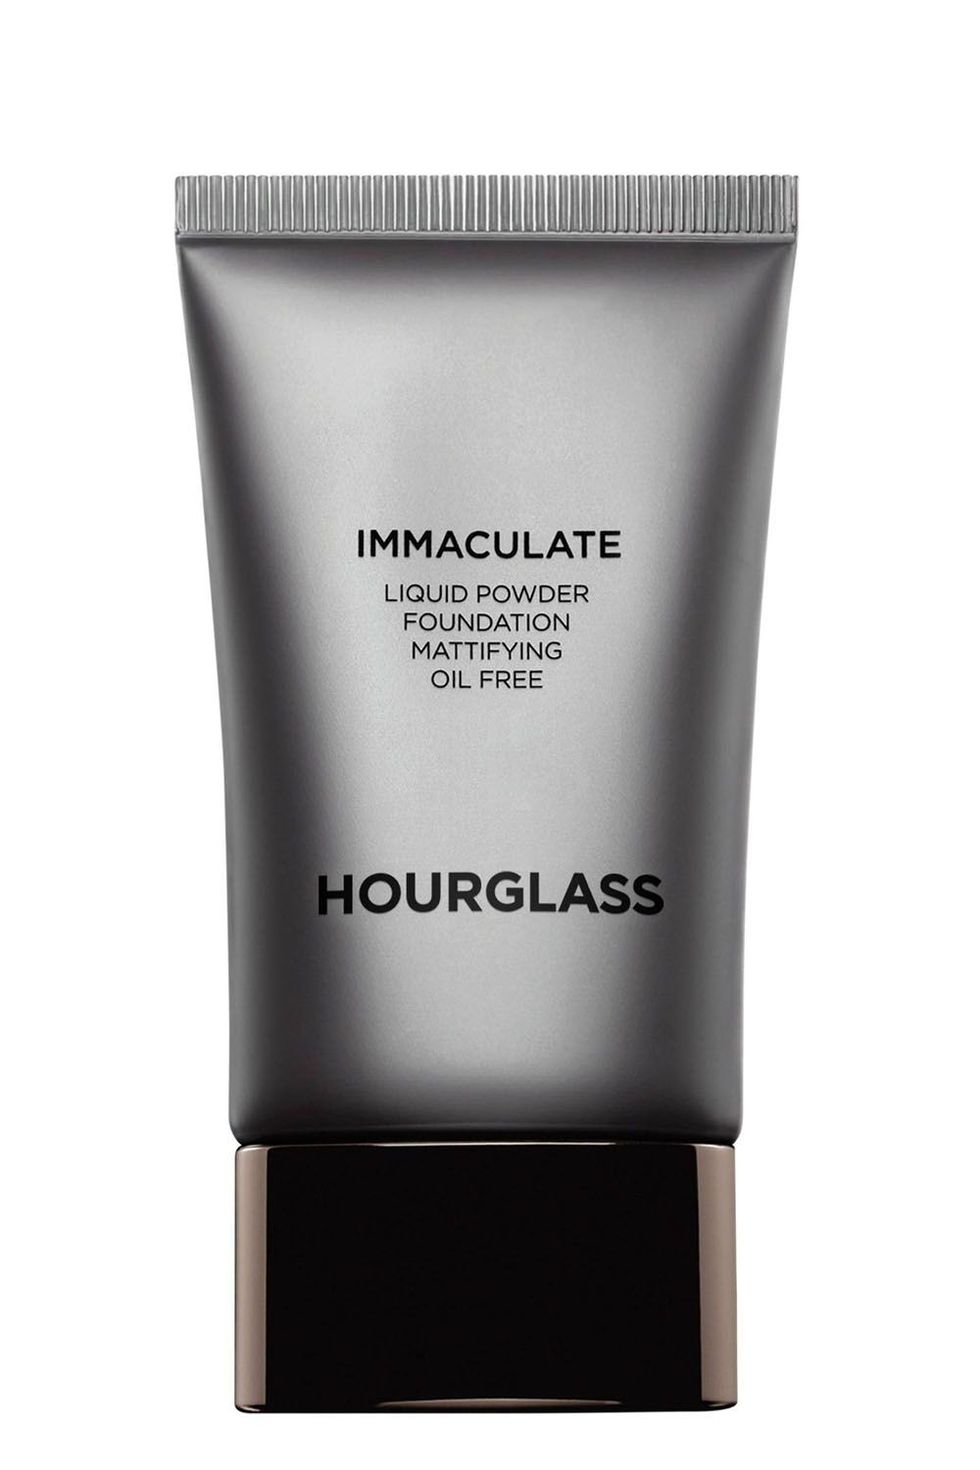 Hourglass Immaculate Liquid Powder Foundation